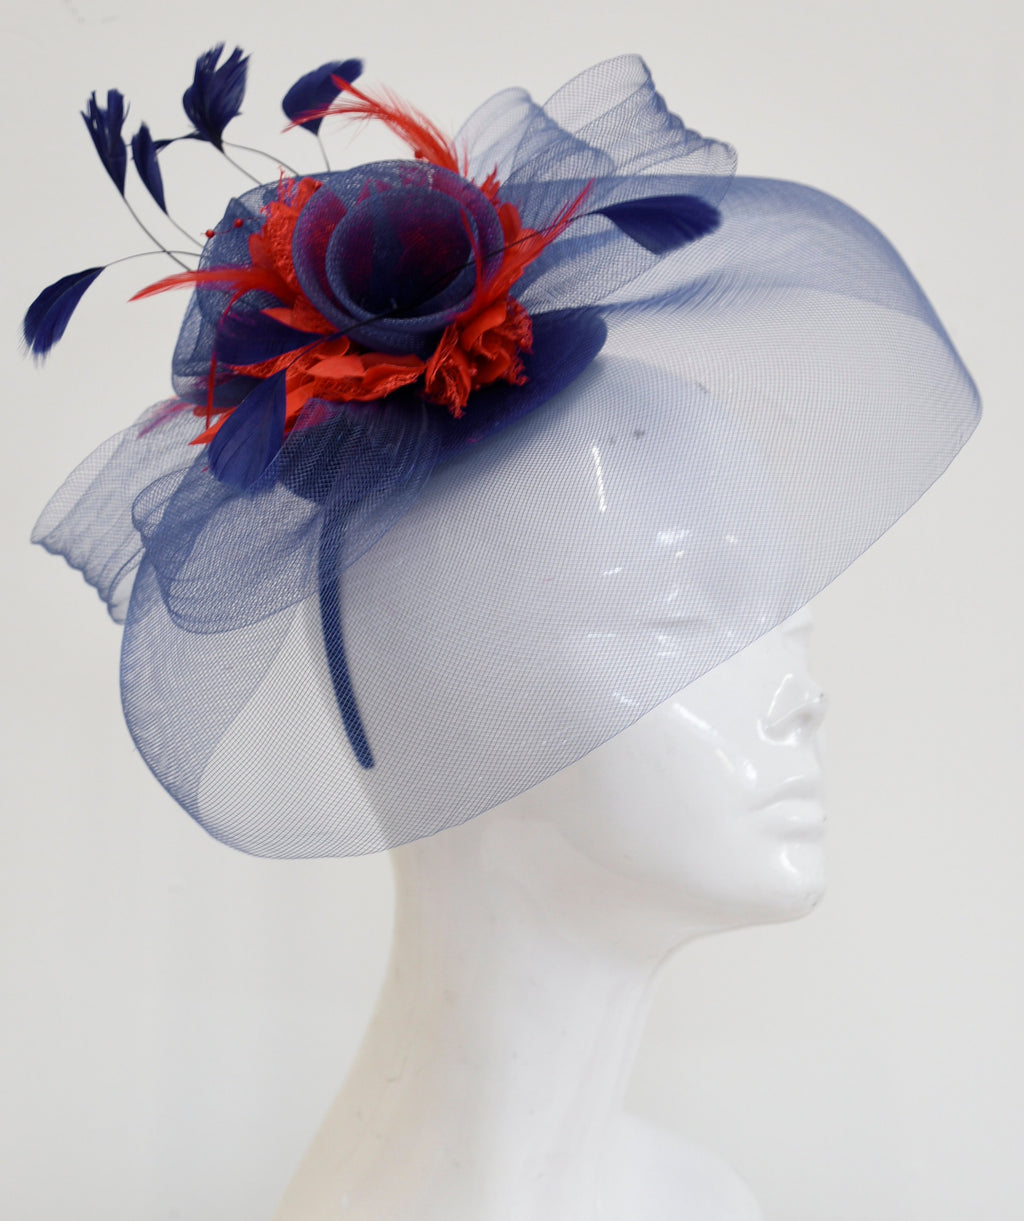 Caprilite Big Navy and Red Fascinator Hat Veil Net Hair Clip Ascot Derby Races Wedding Headband Feather Flower